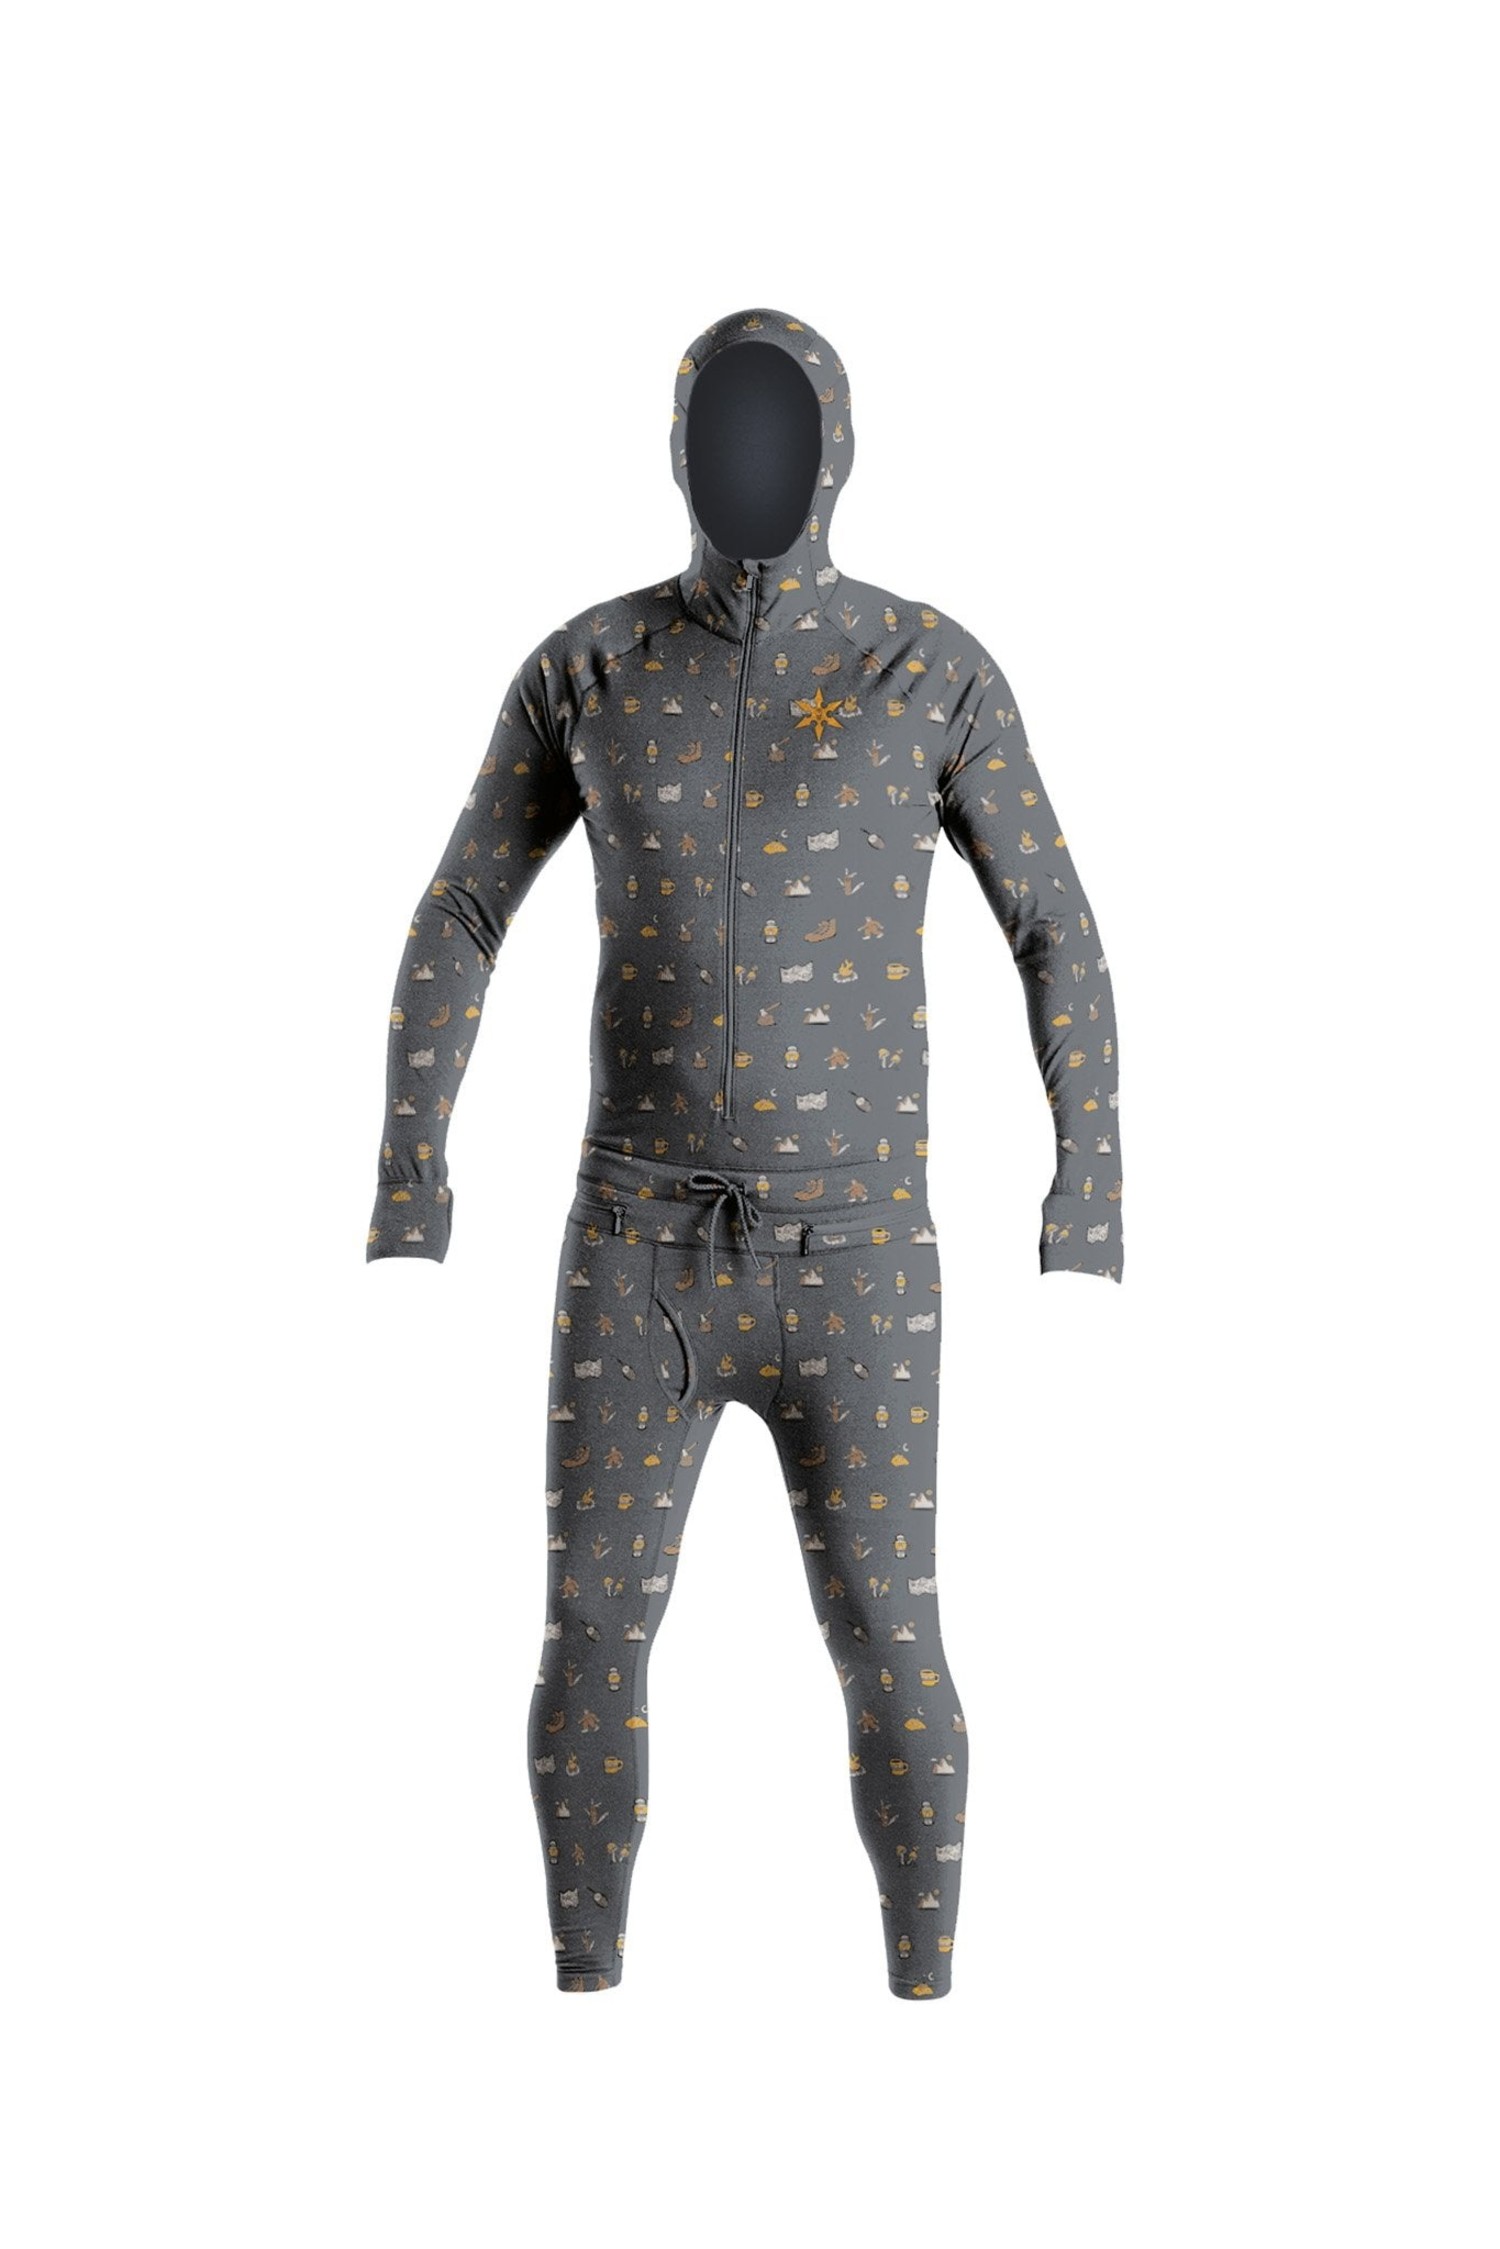 https://cdn.shoplightspeed.com/shops/629247/files/40410271/1500x4000x3/airblaster-classic-ninja-suit-grey-camp-print.jpg